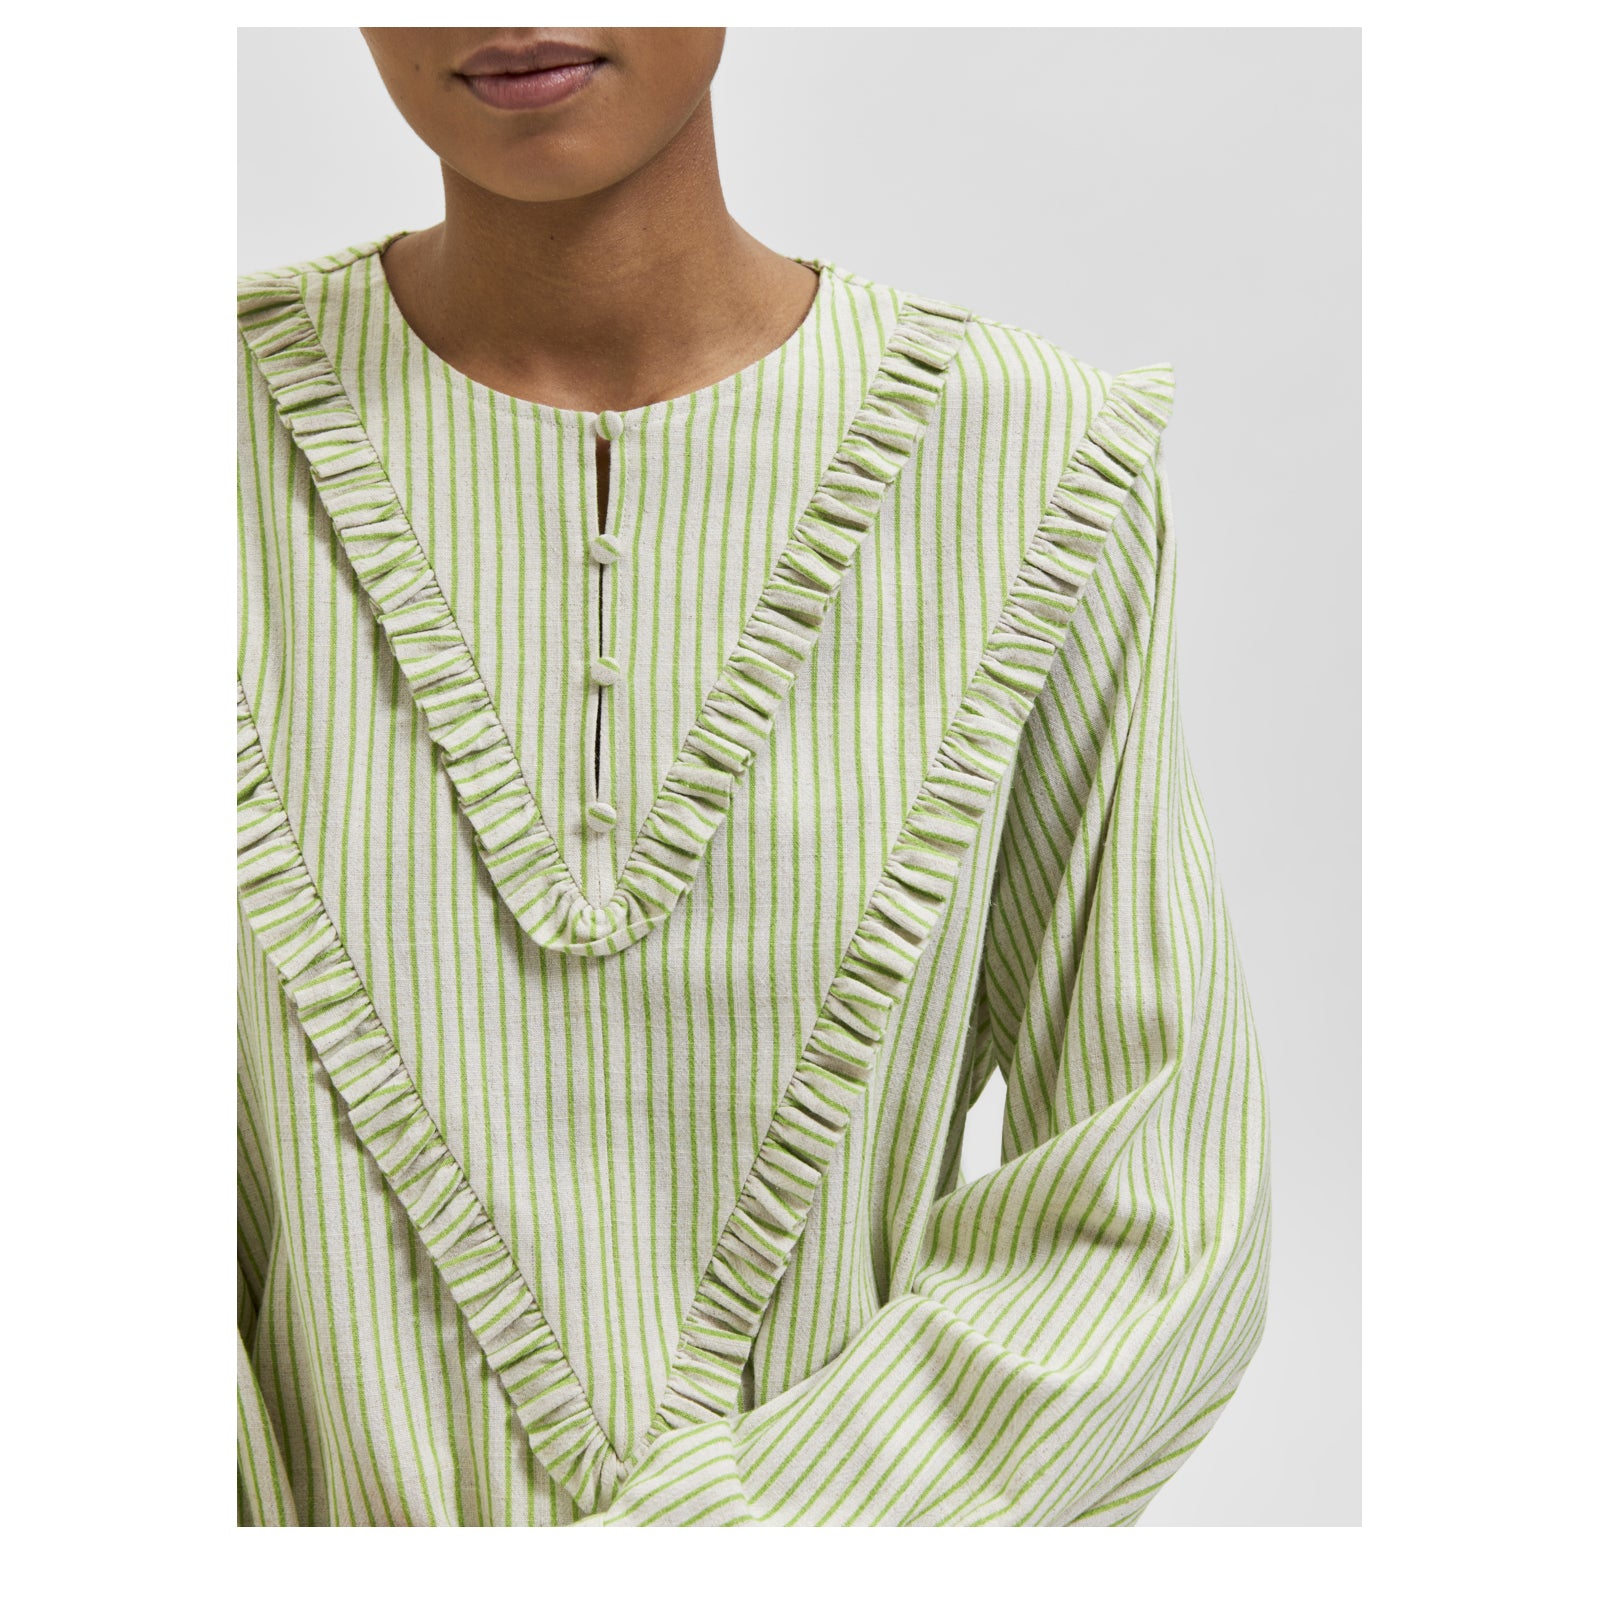 Selected Femme Gellis Green Stripe Ruffle Top